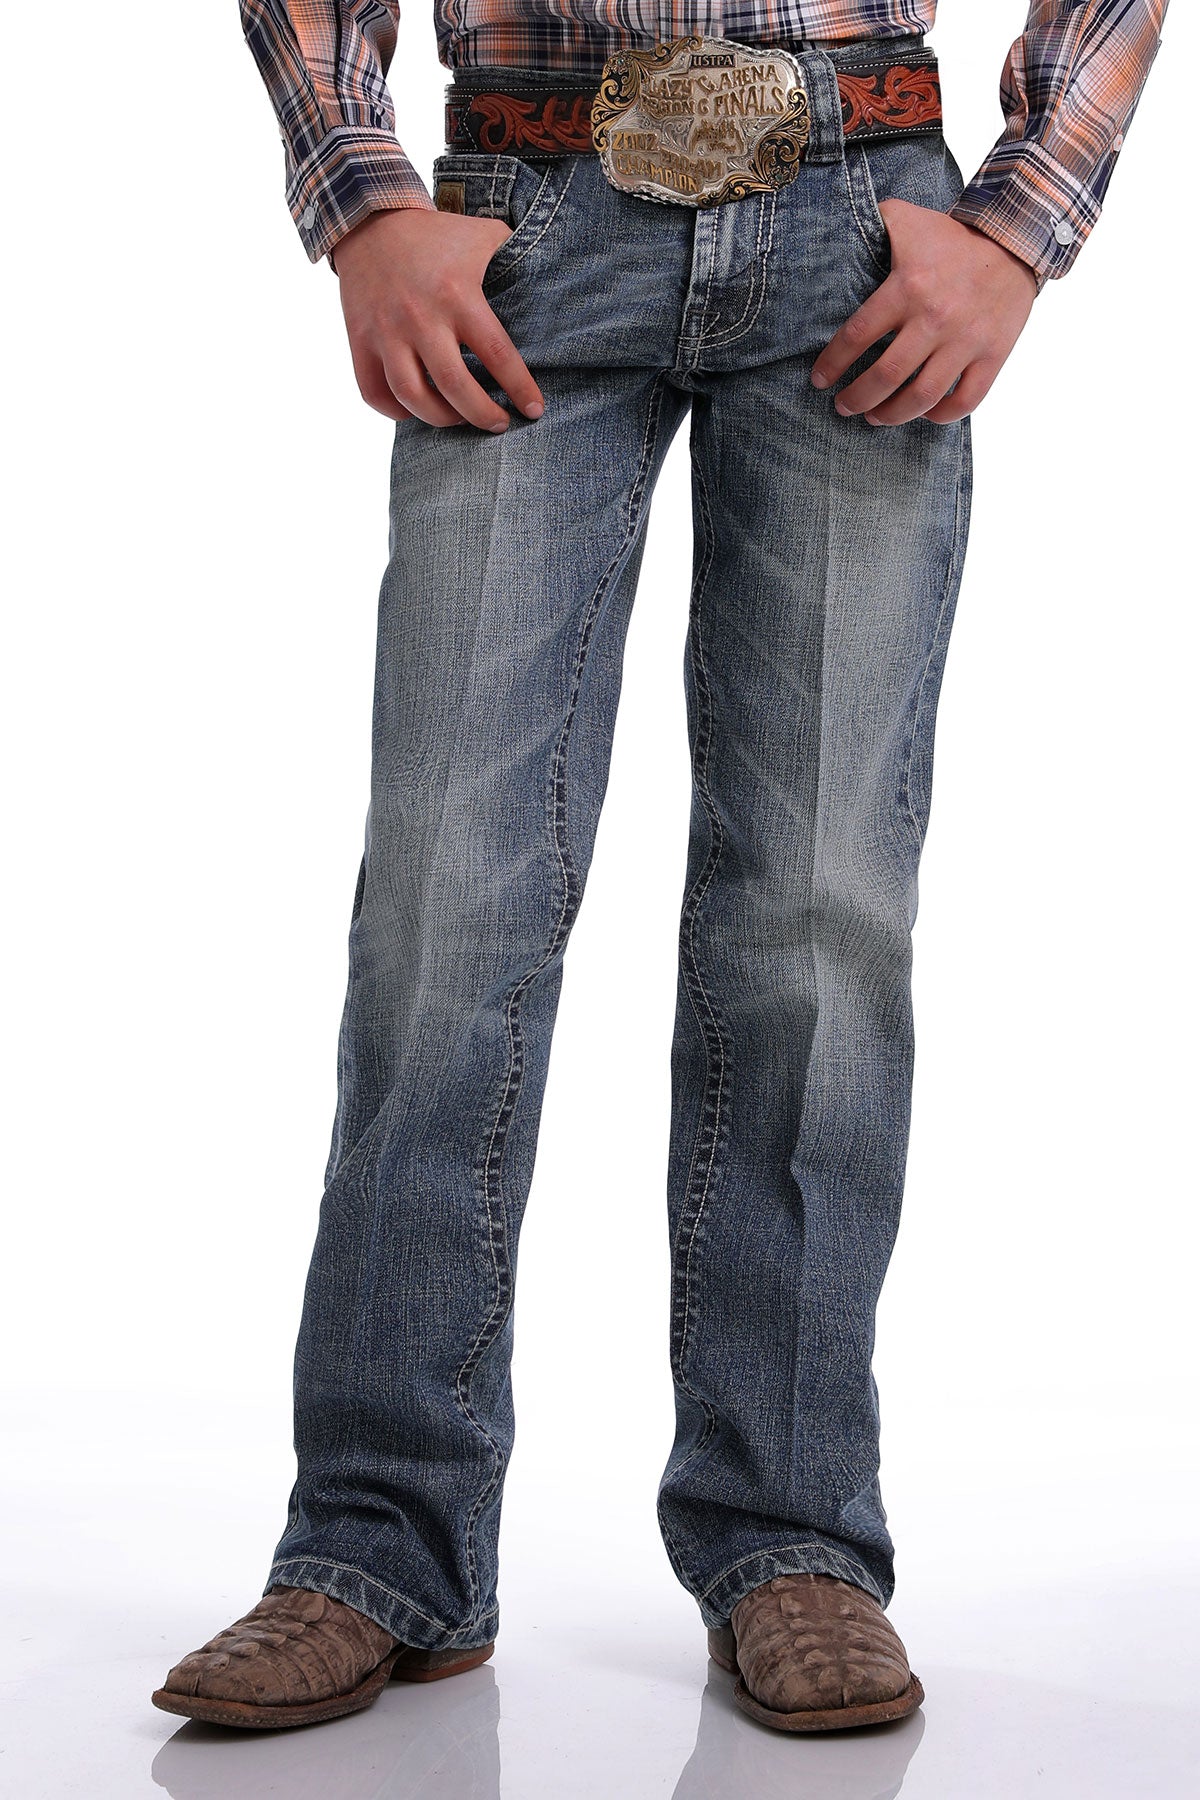 Cinch Boy's Jeans STYLE MB16781002